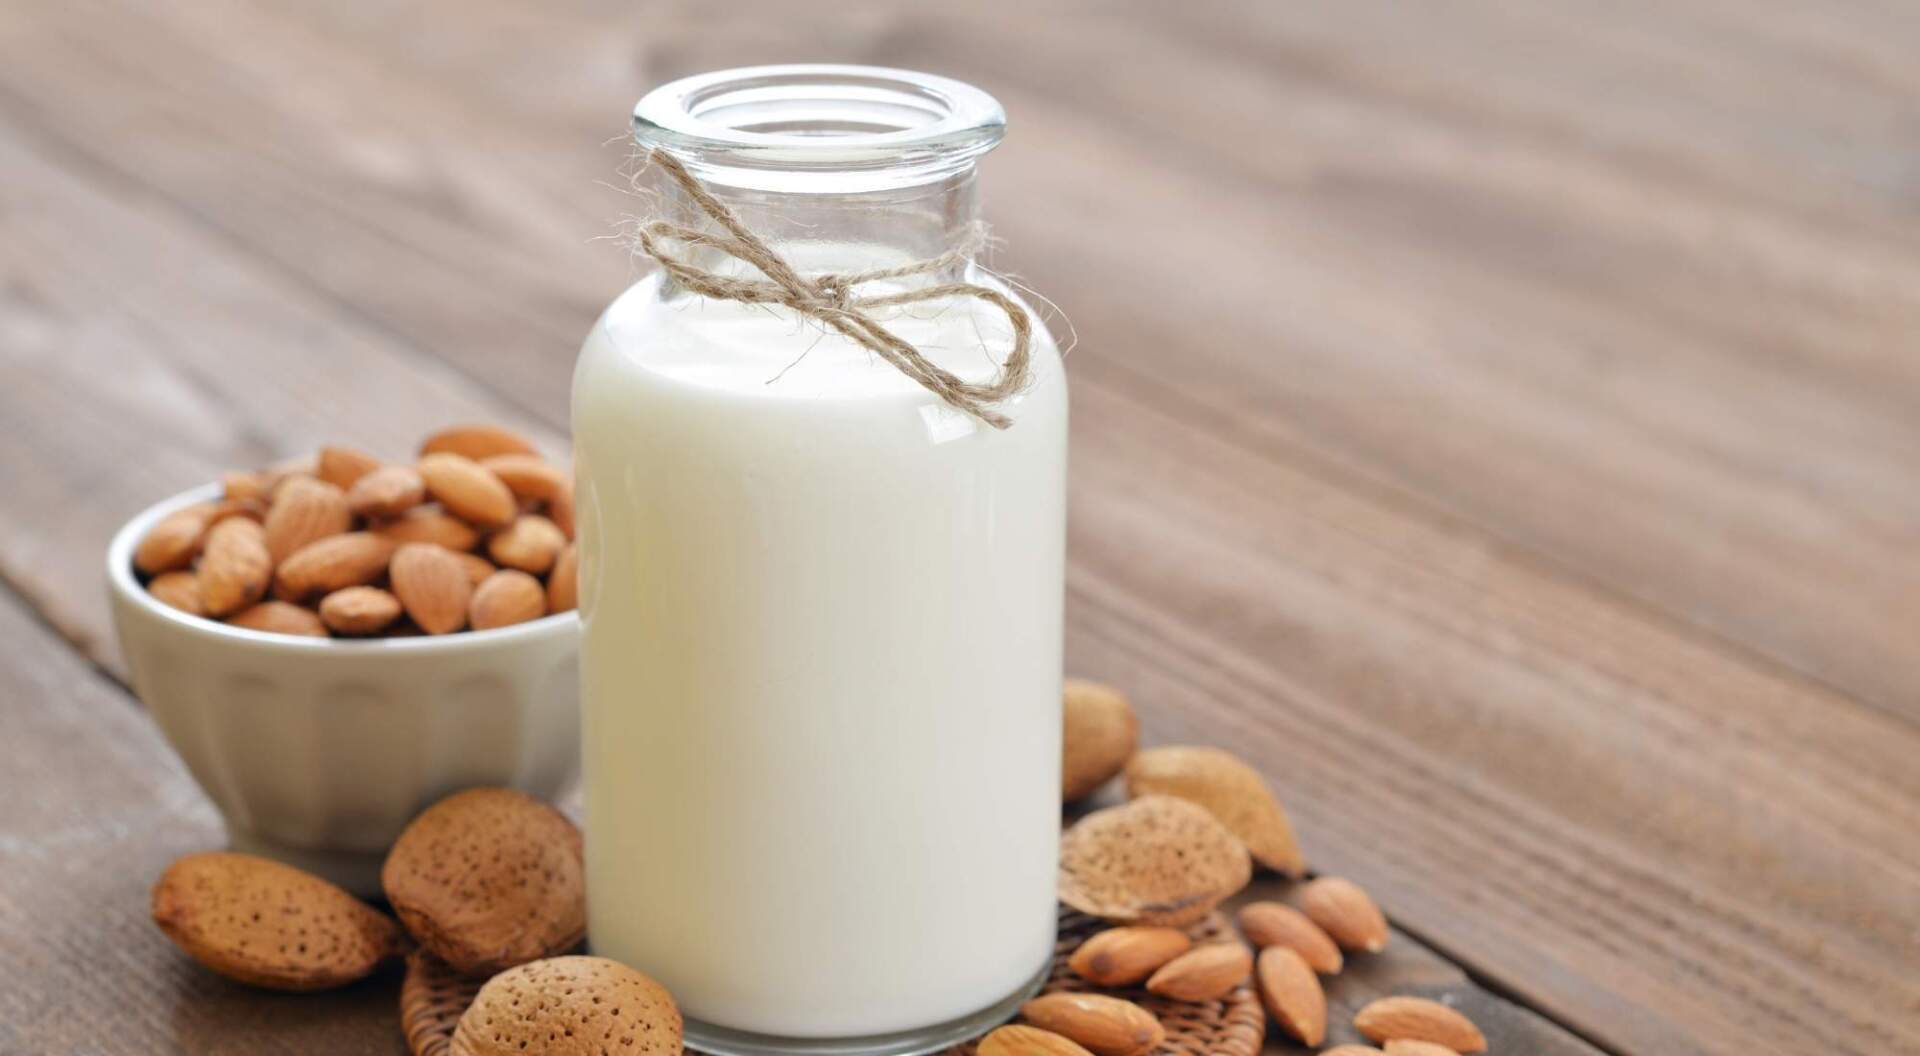 can pregnant women drink almond milk